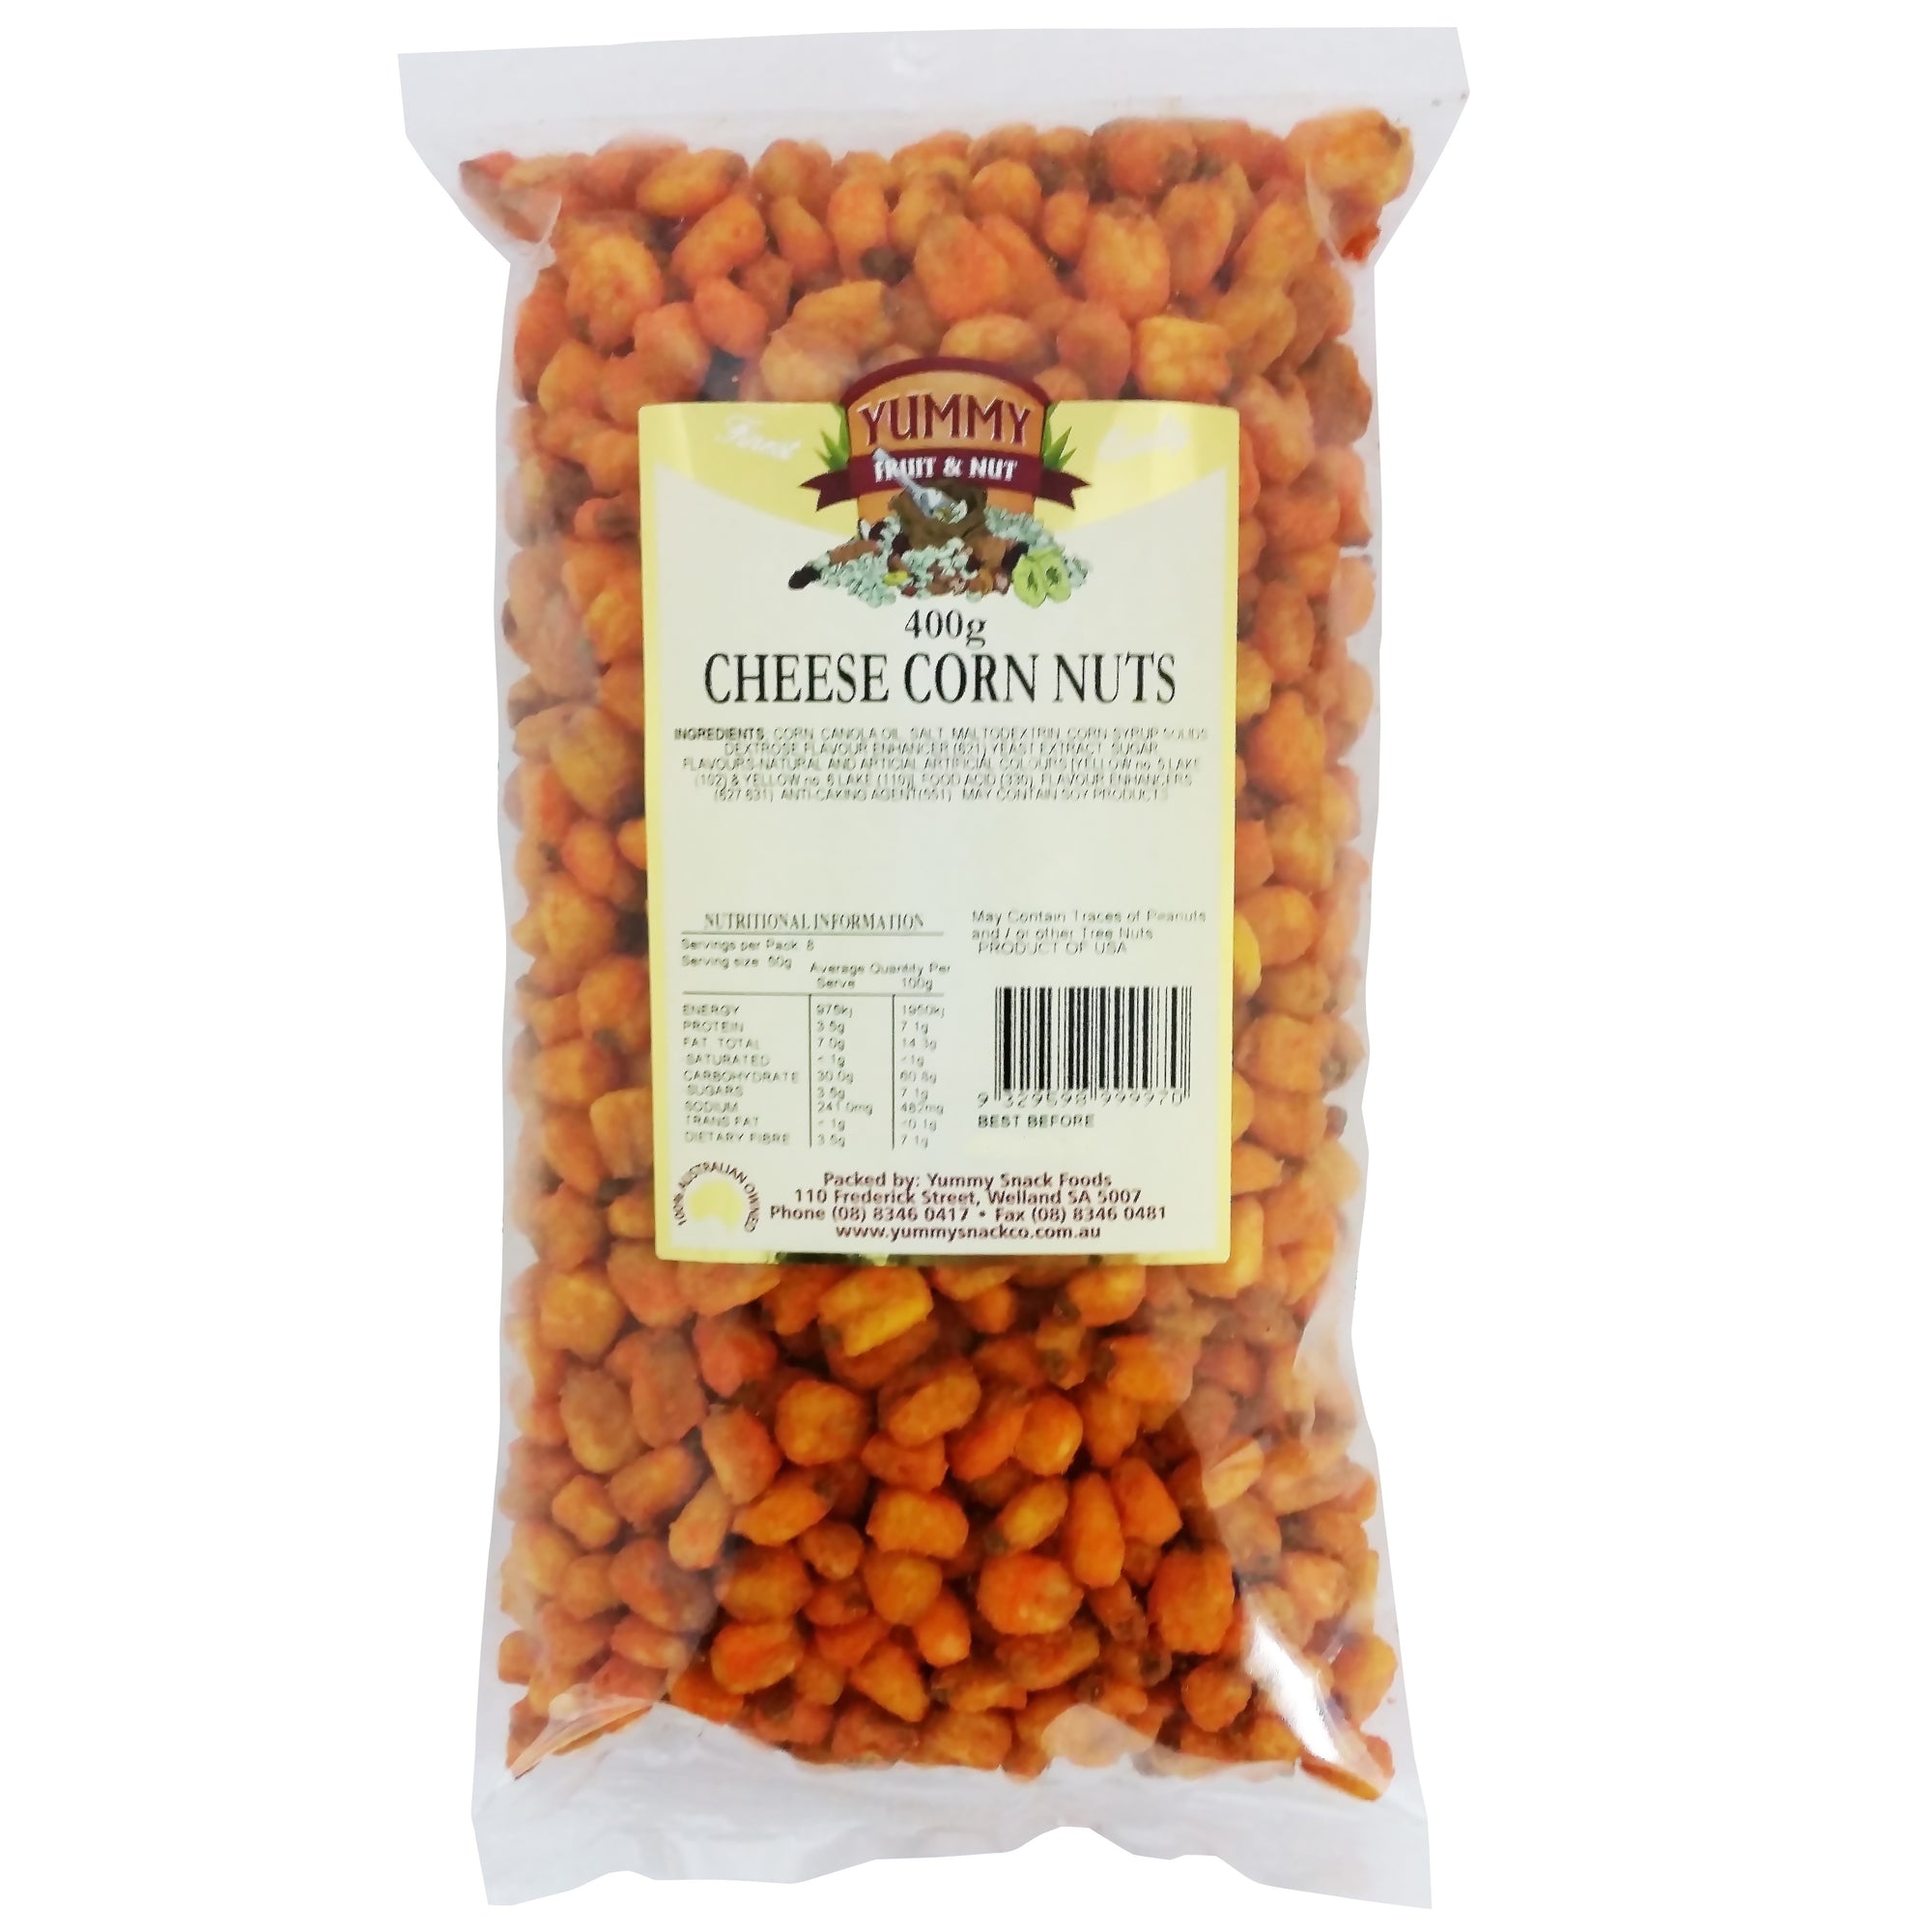 Yummy Cheese Corn Nuts 400g